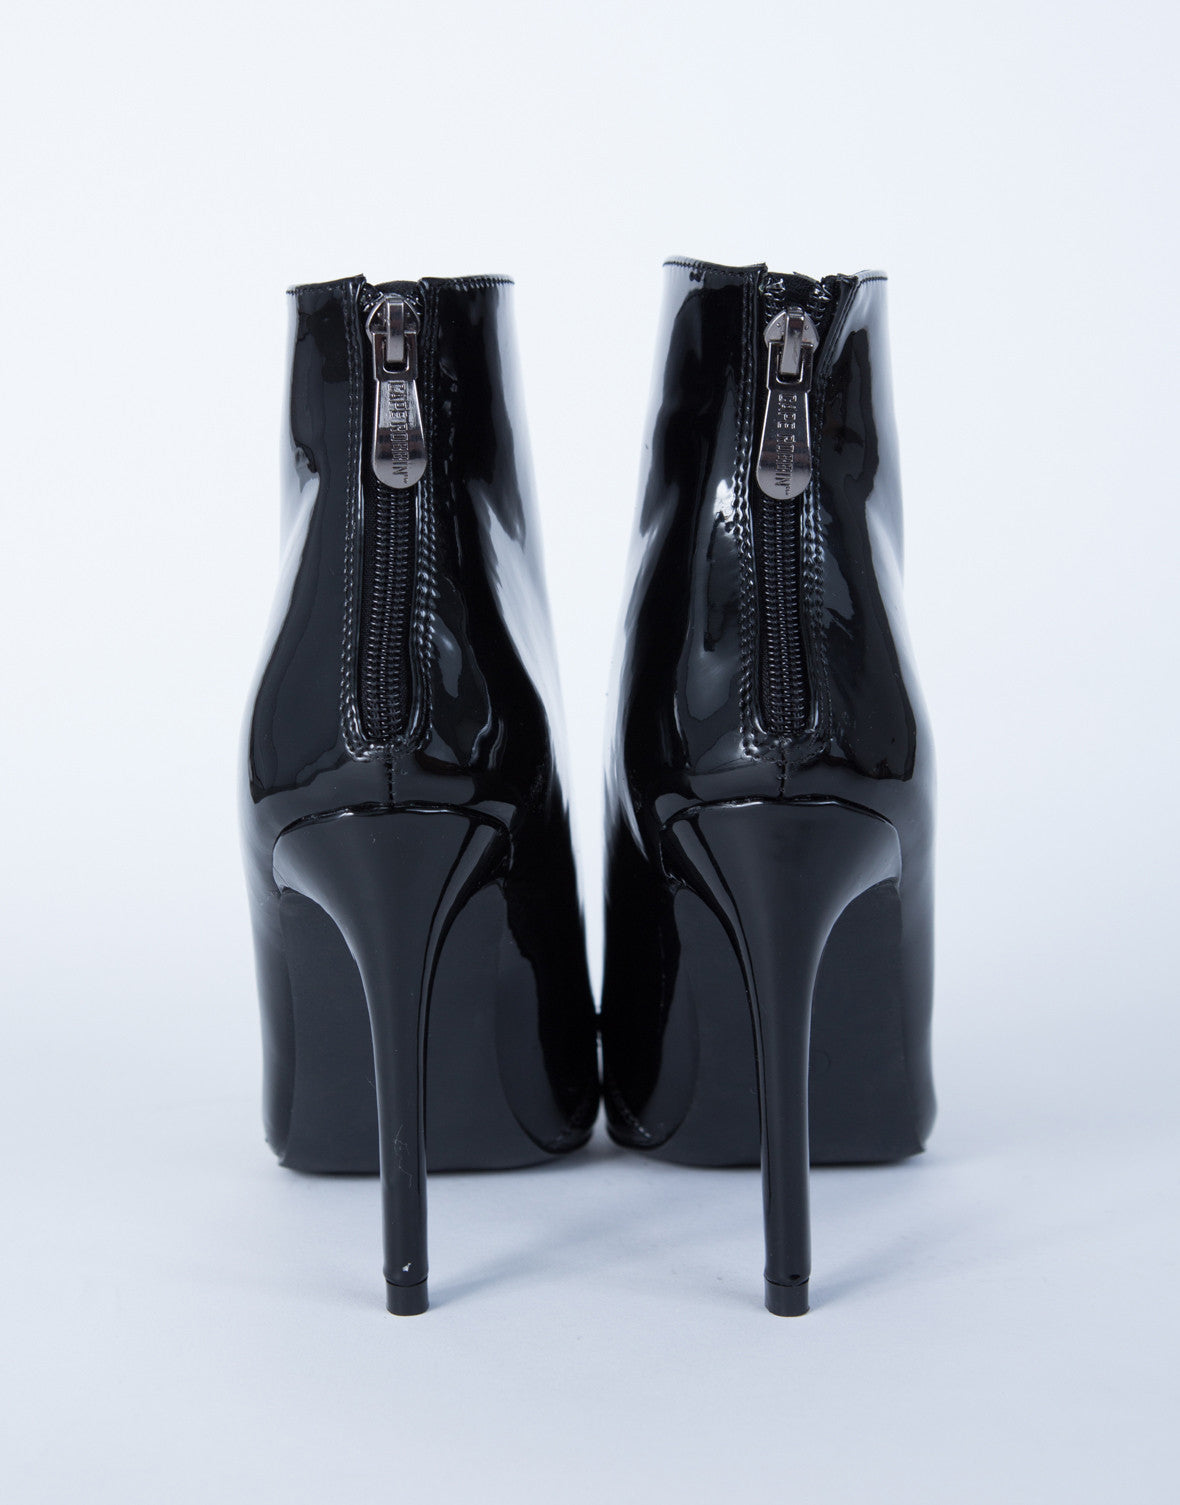 patent leather heels